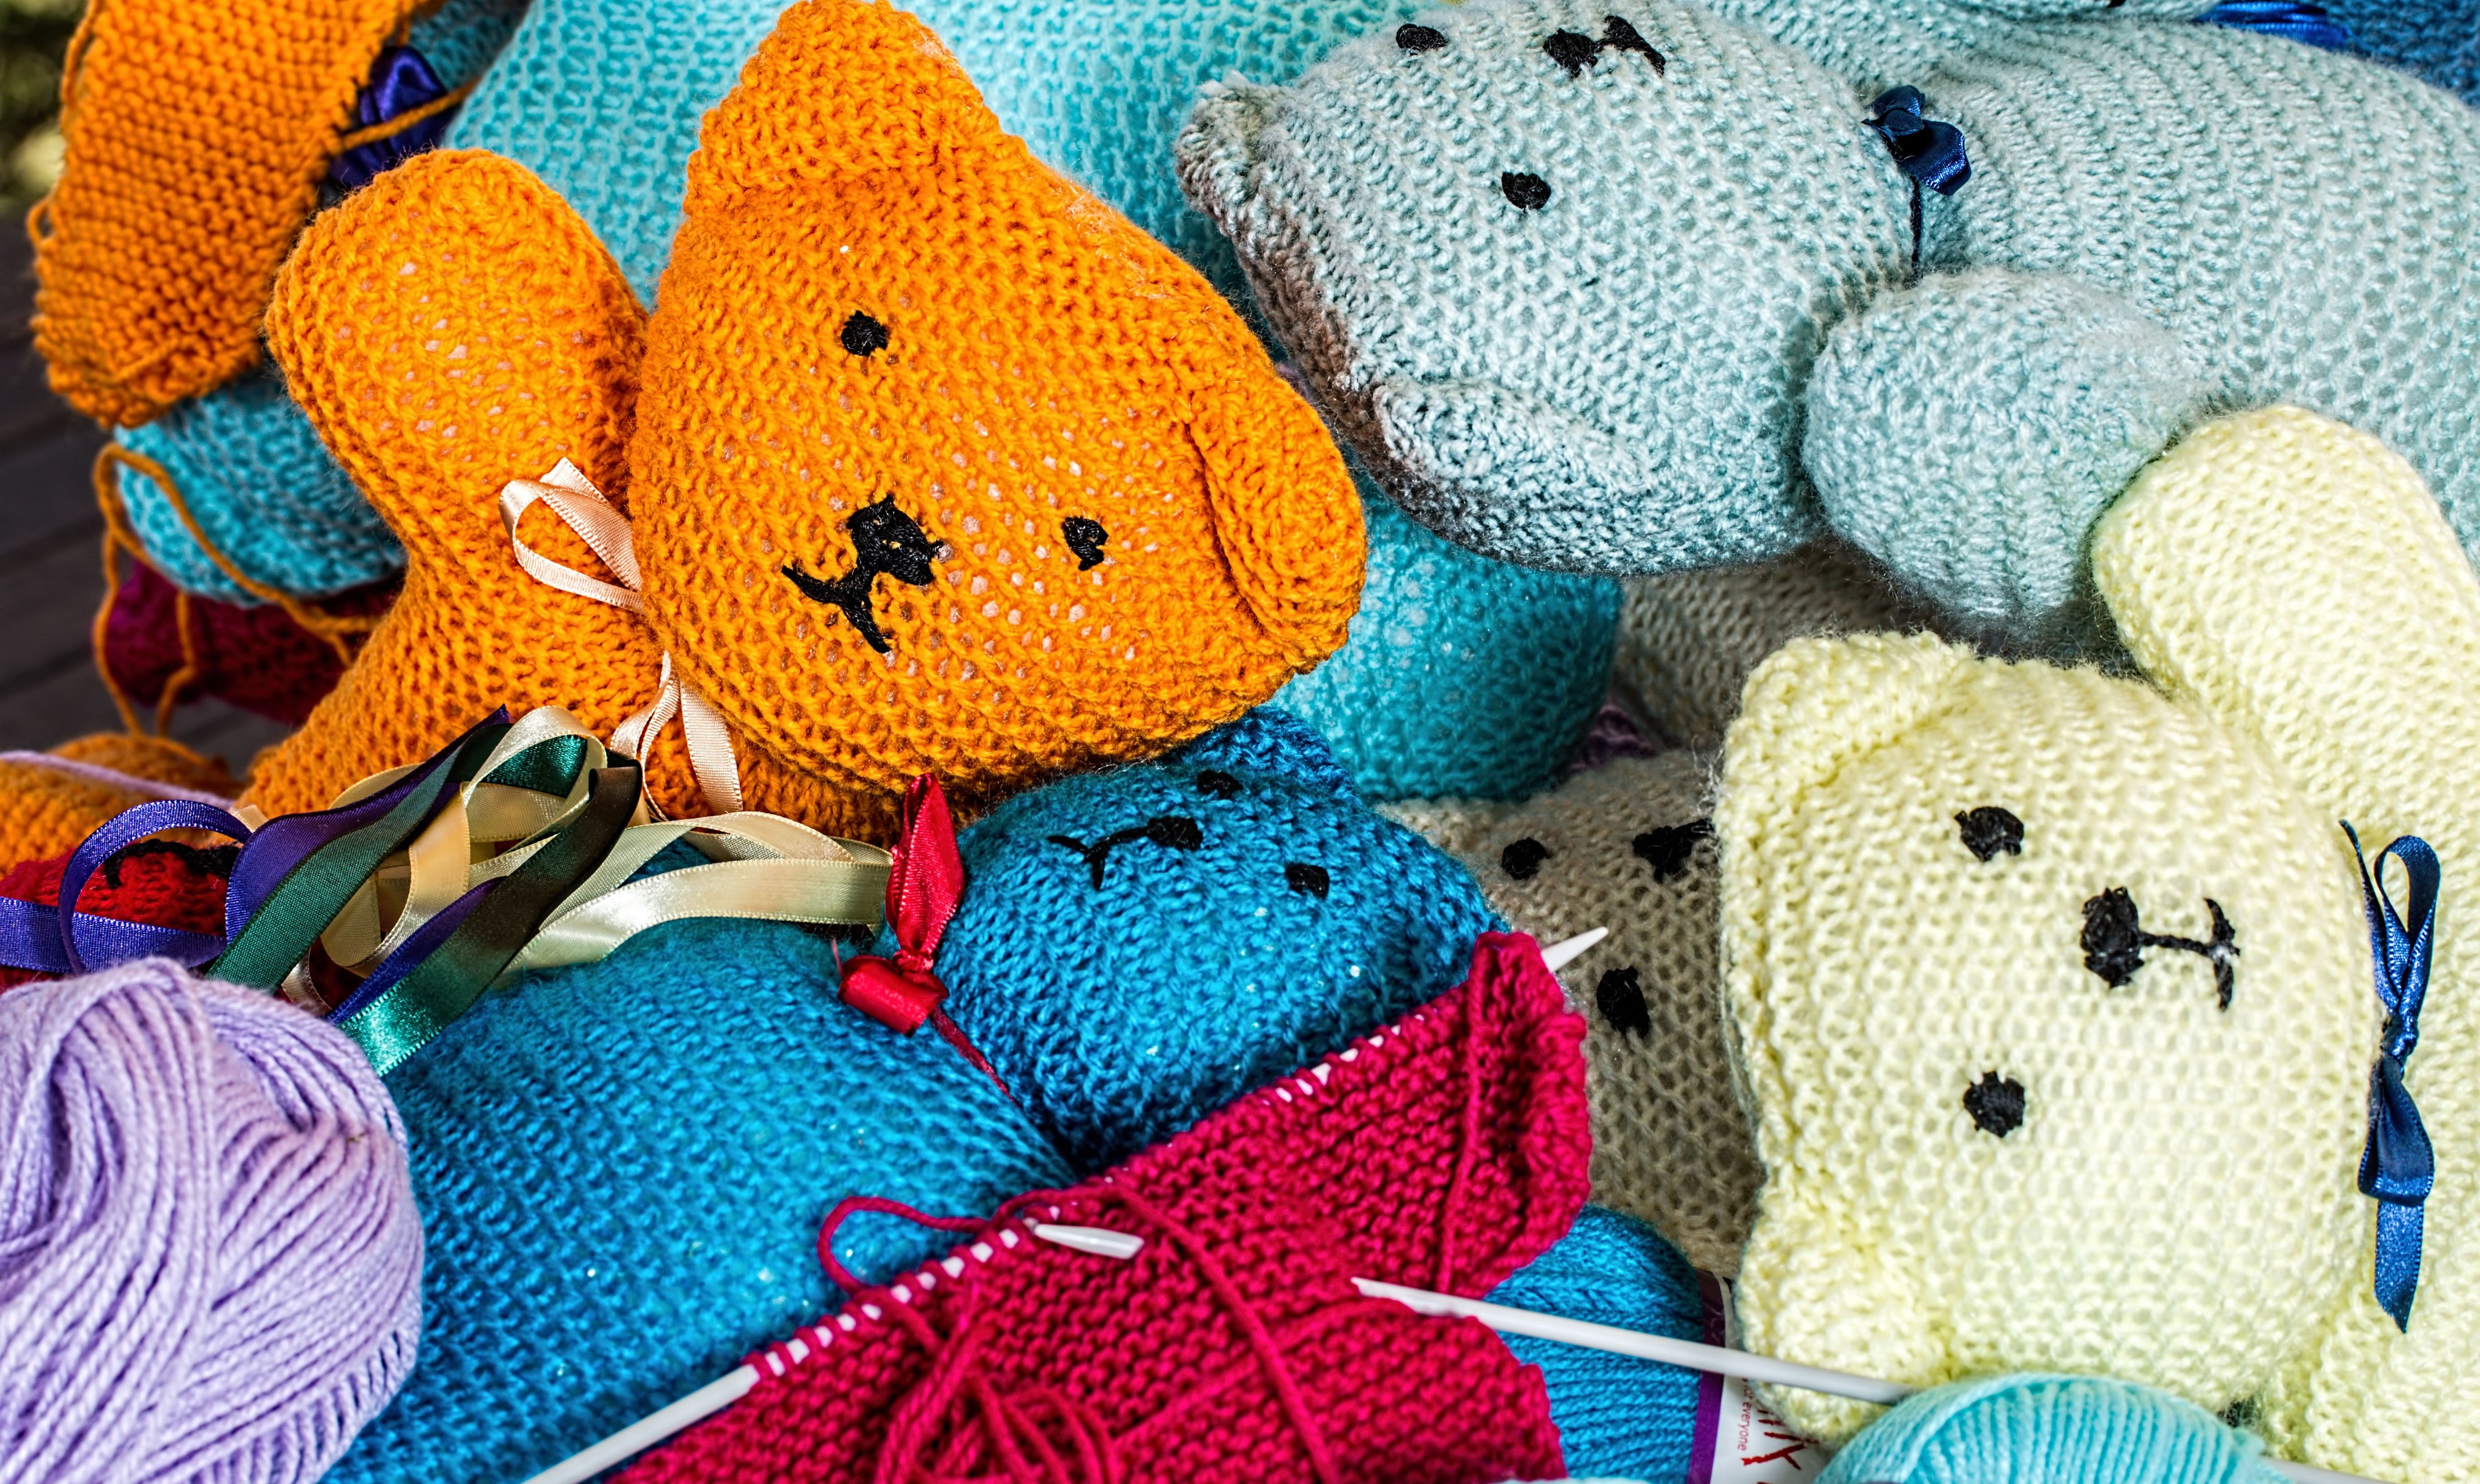 Crochet teddy bears